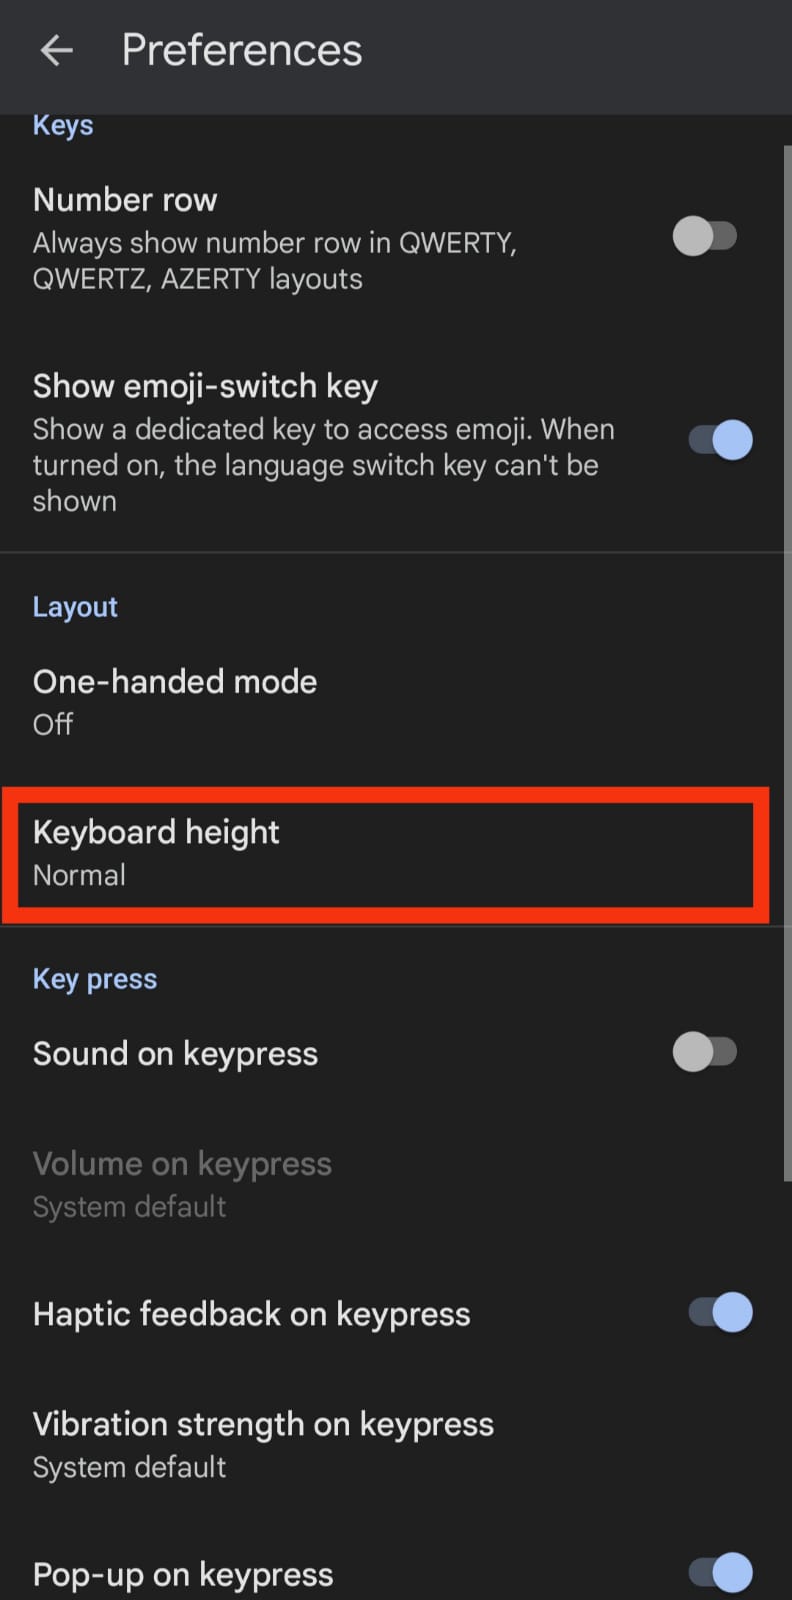 Tap on Keyboard height.